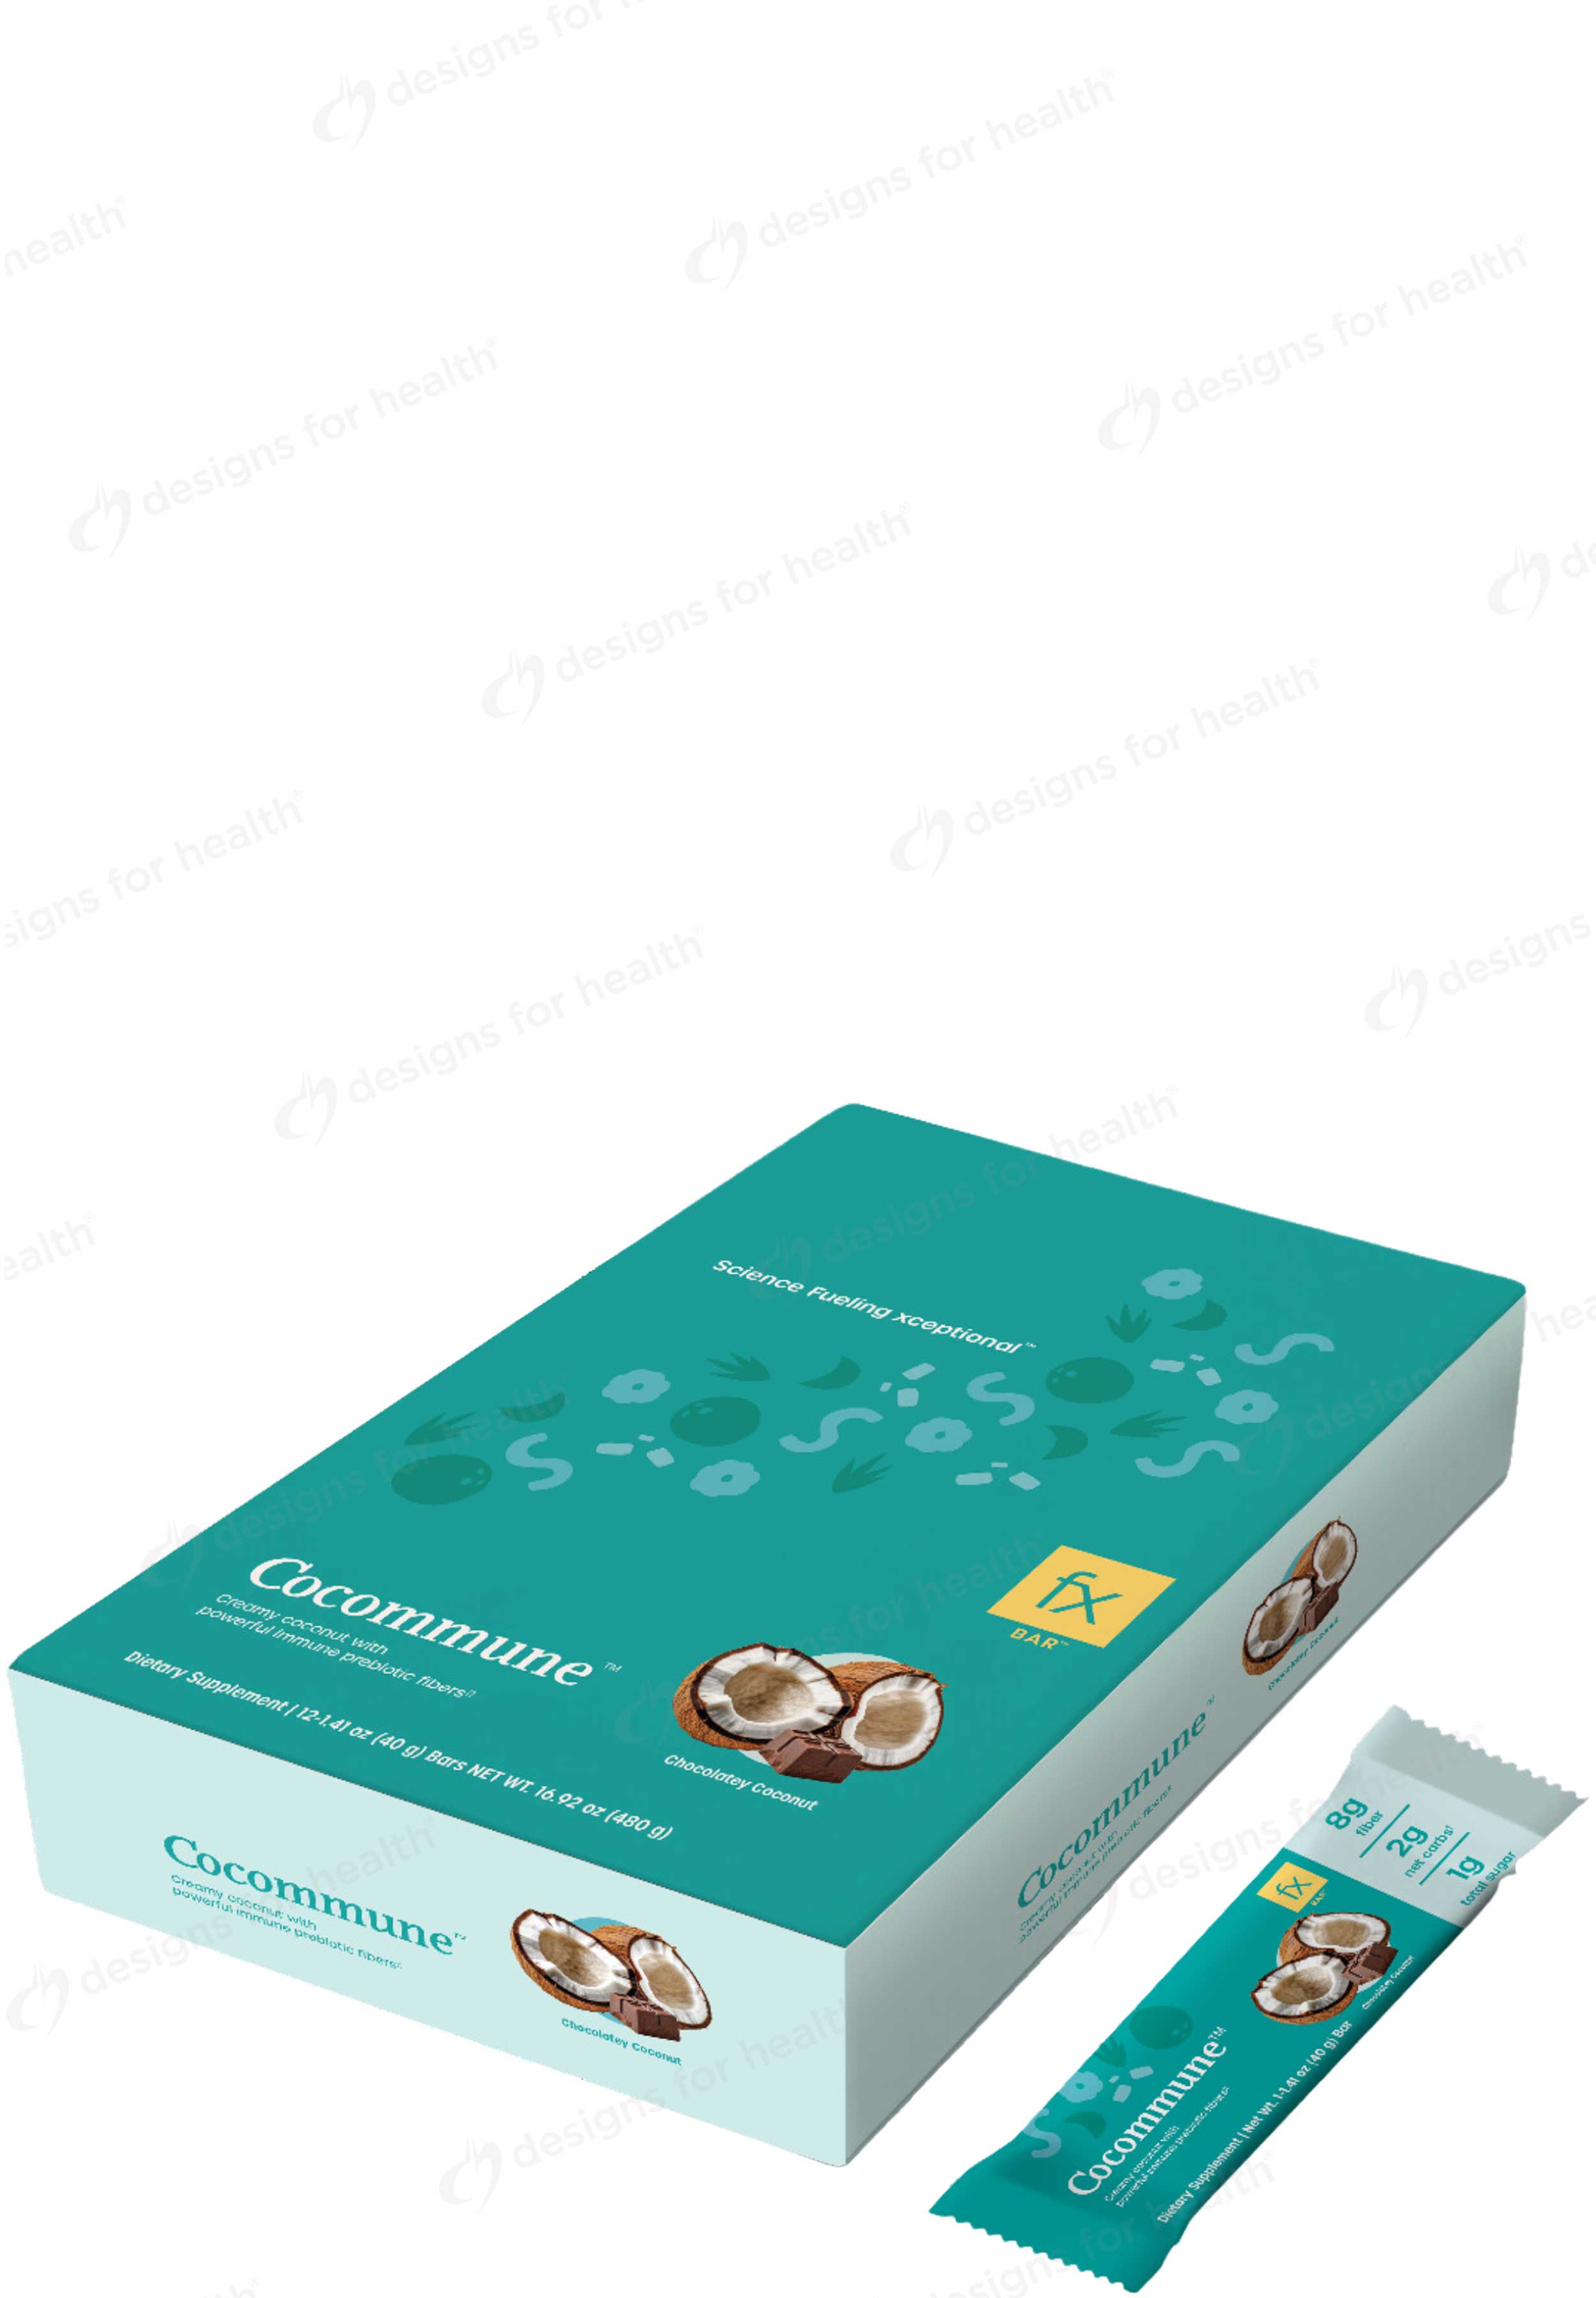 Designs for Health Cocommune™ (12 Bars) Box